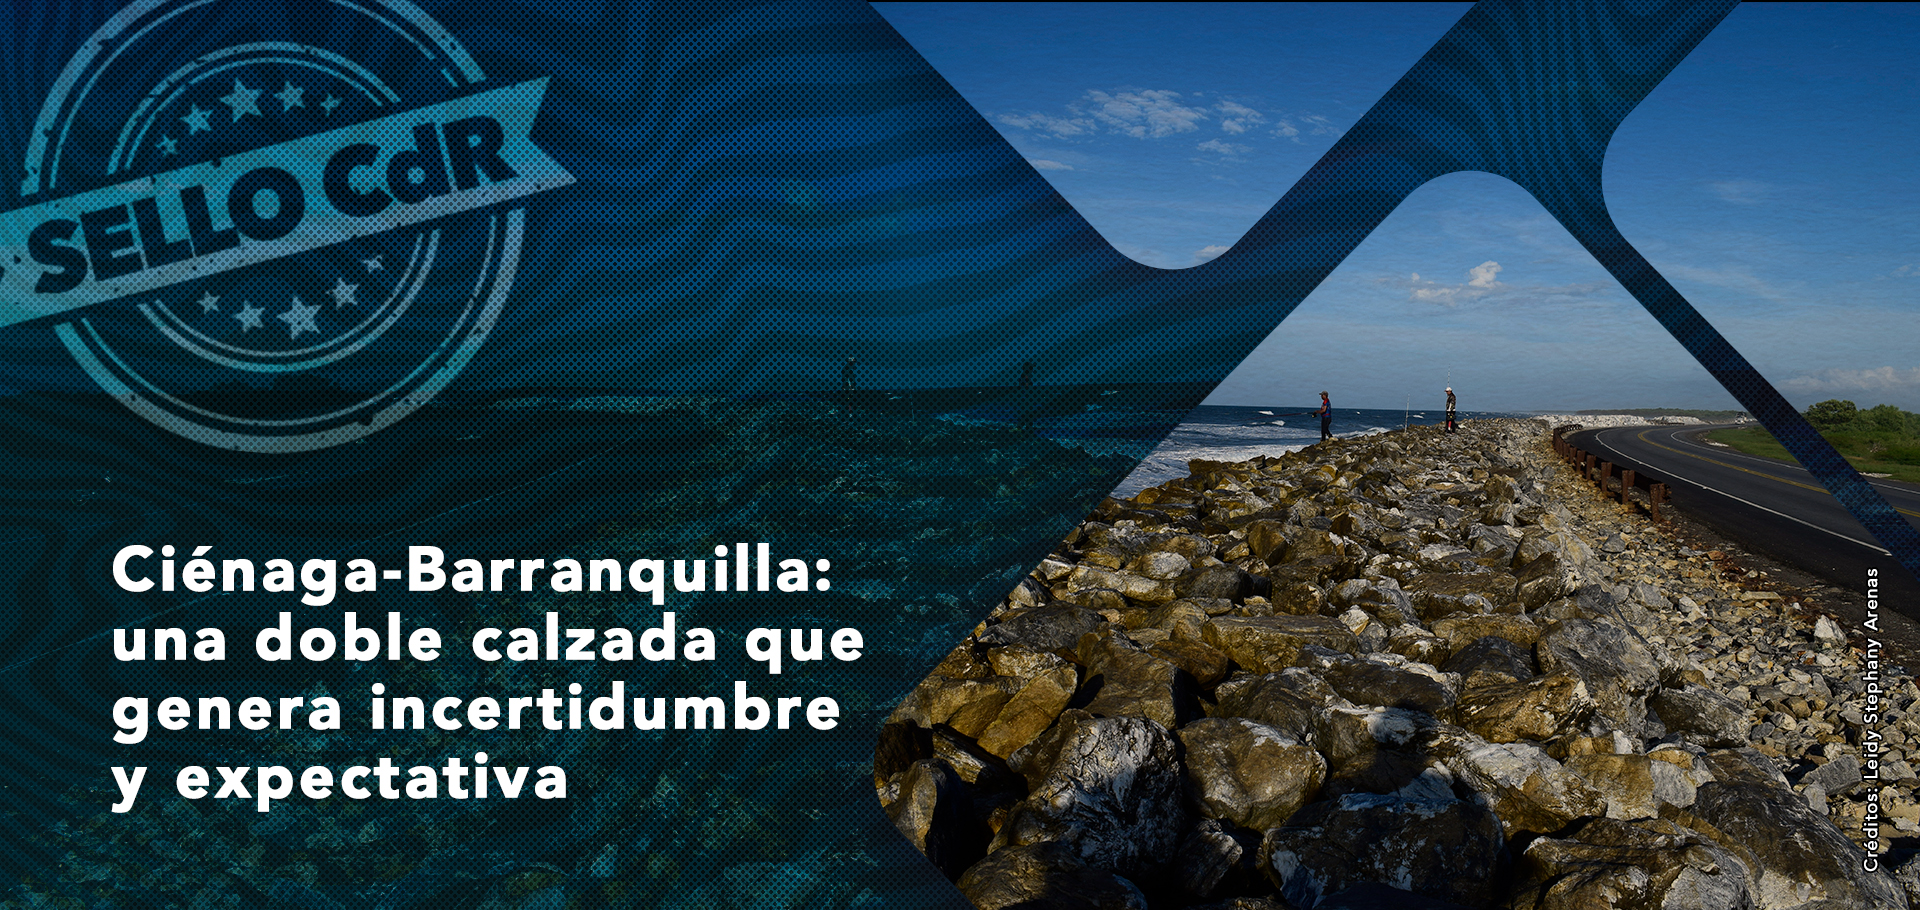 Ciénaga-Barranquilla: una doble calzada que genera incertidumbre y expectativa